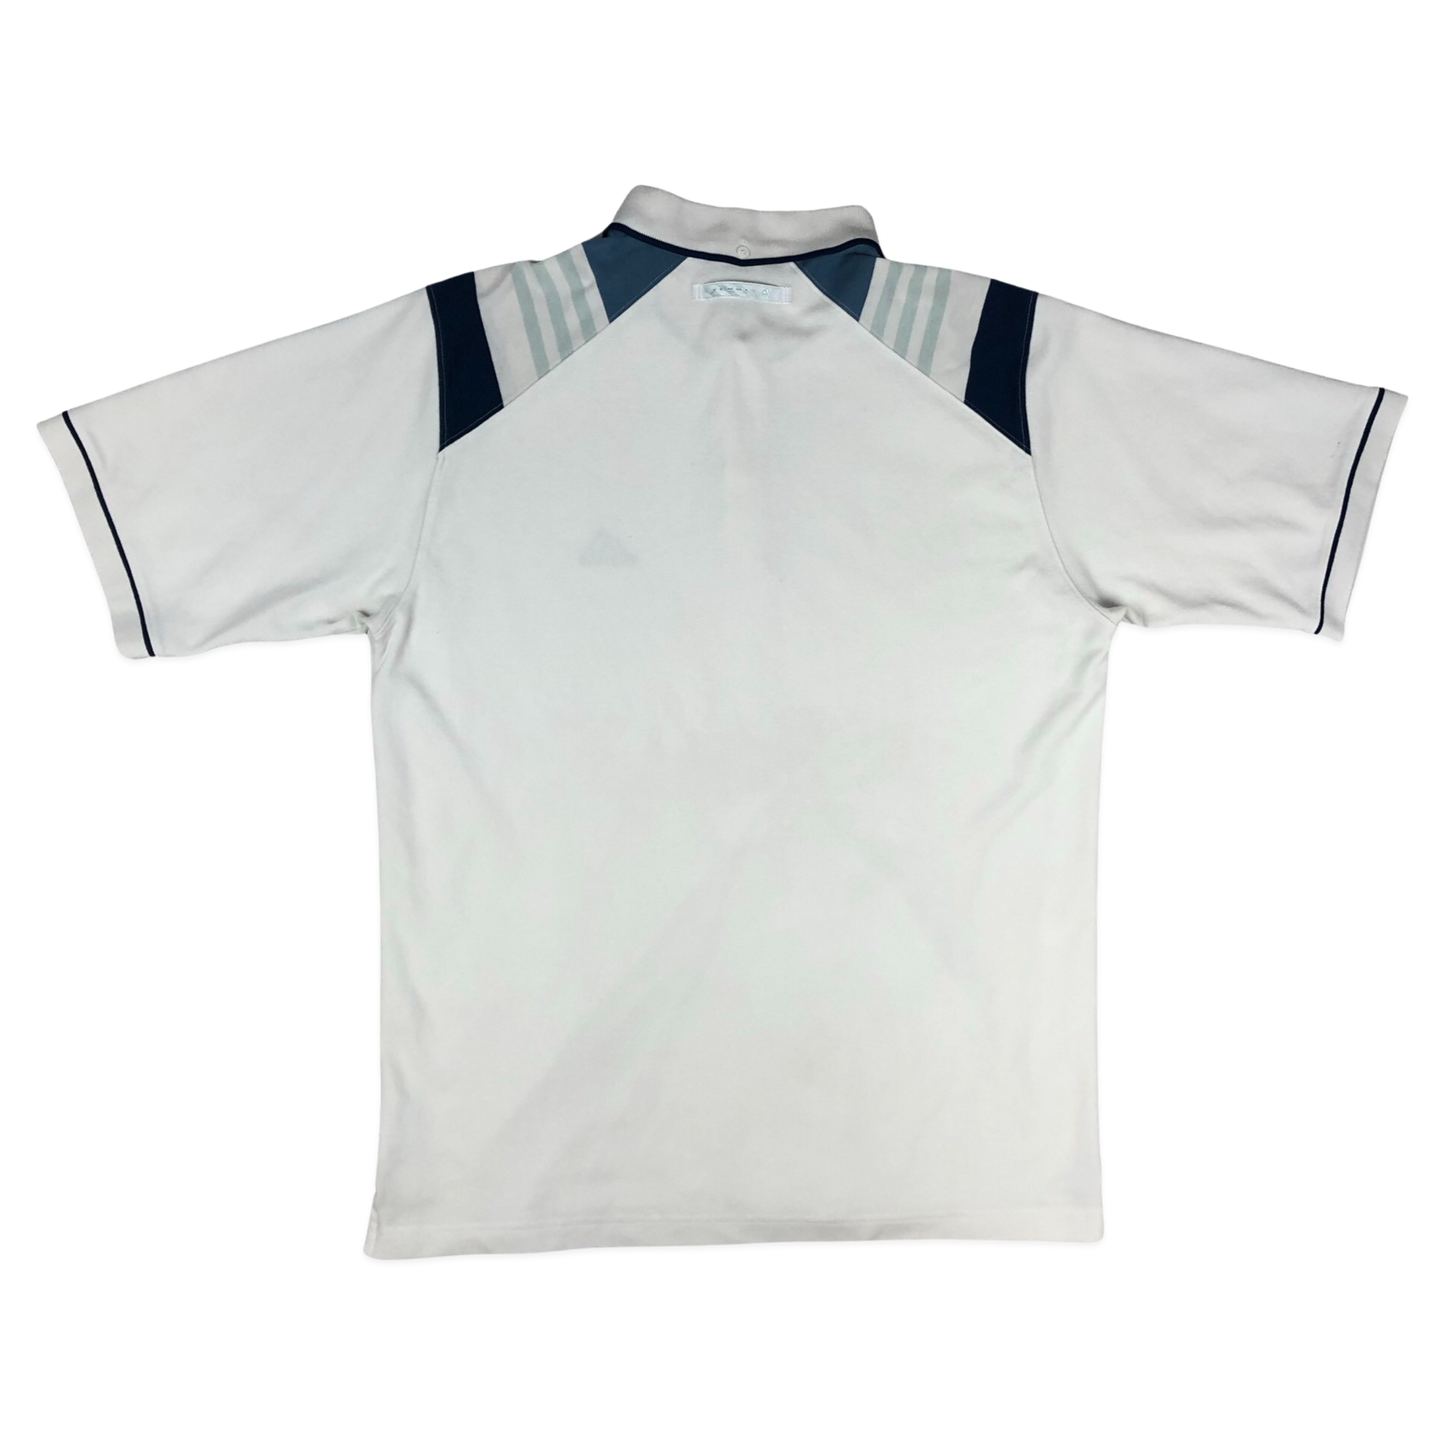 Vintage 90s Y2K Adidas White Polo Shirt L